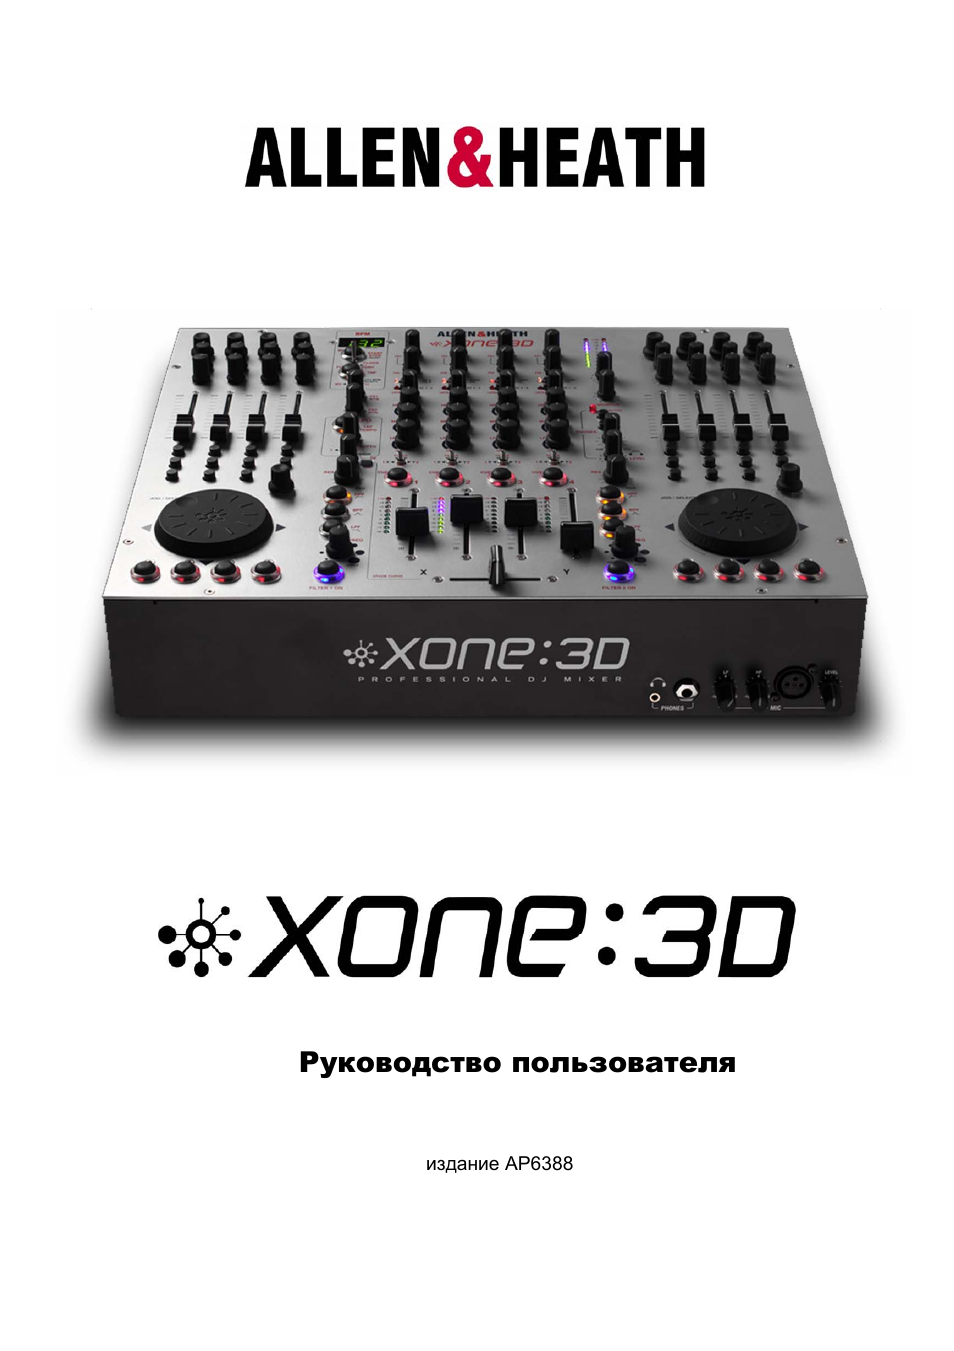 XONE 3d_ap6388_1 User Manual | 43 pages